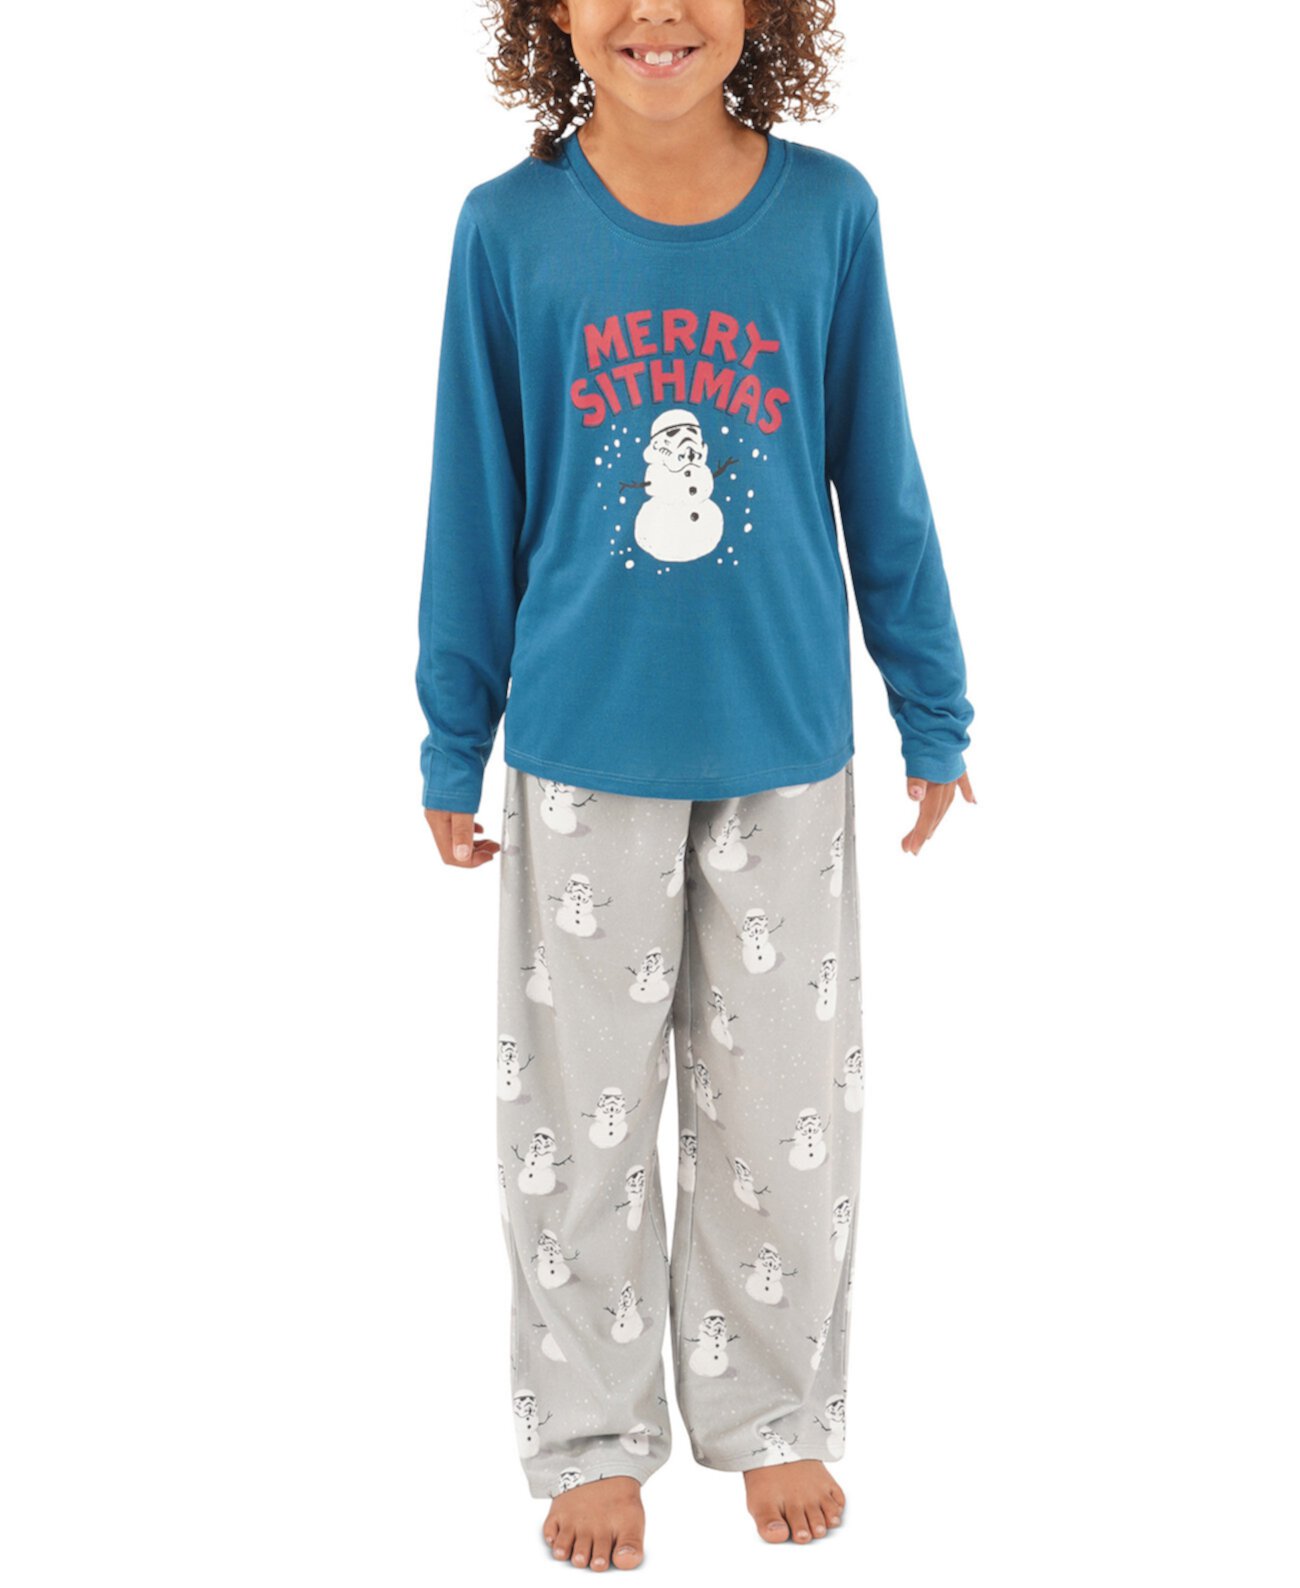 Семейный пижамный комплект Matching Kids Holiday Merry Sithmas Munki Munki